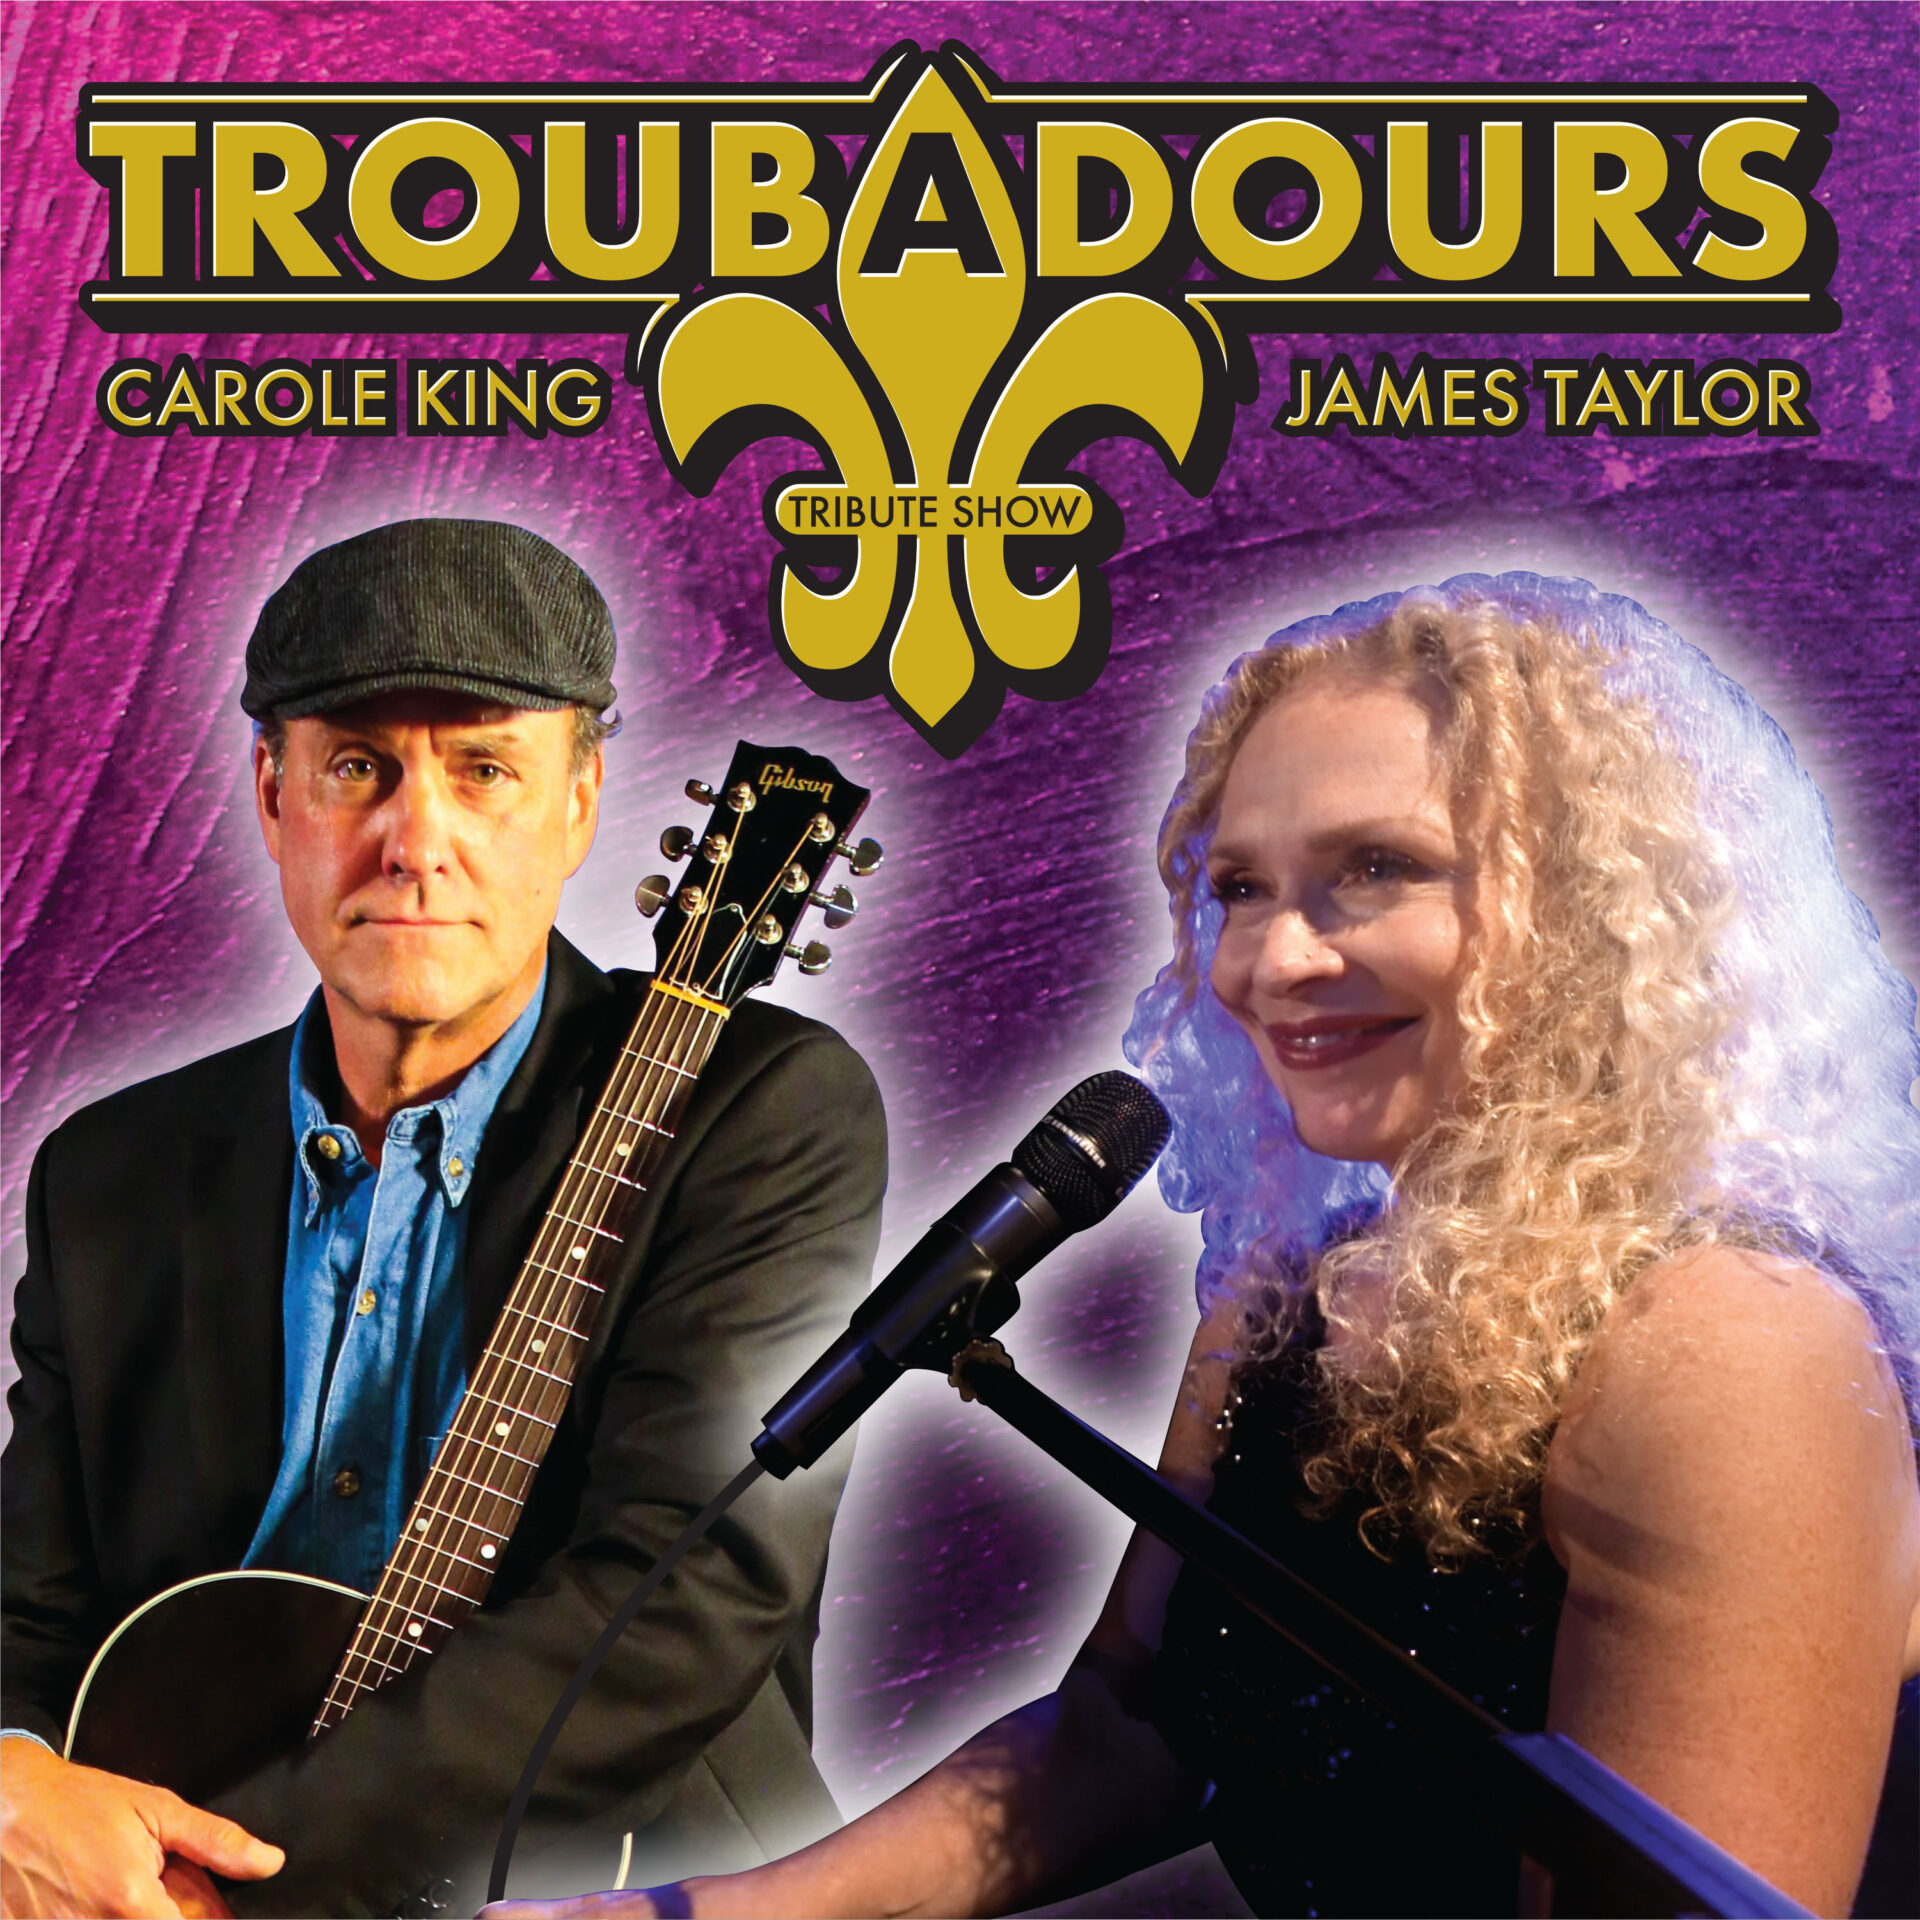 james taylor troubadour tour 2021